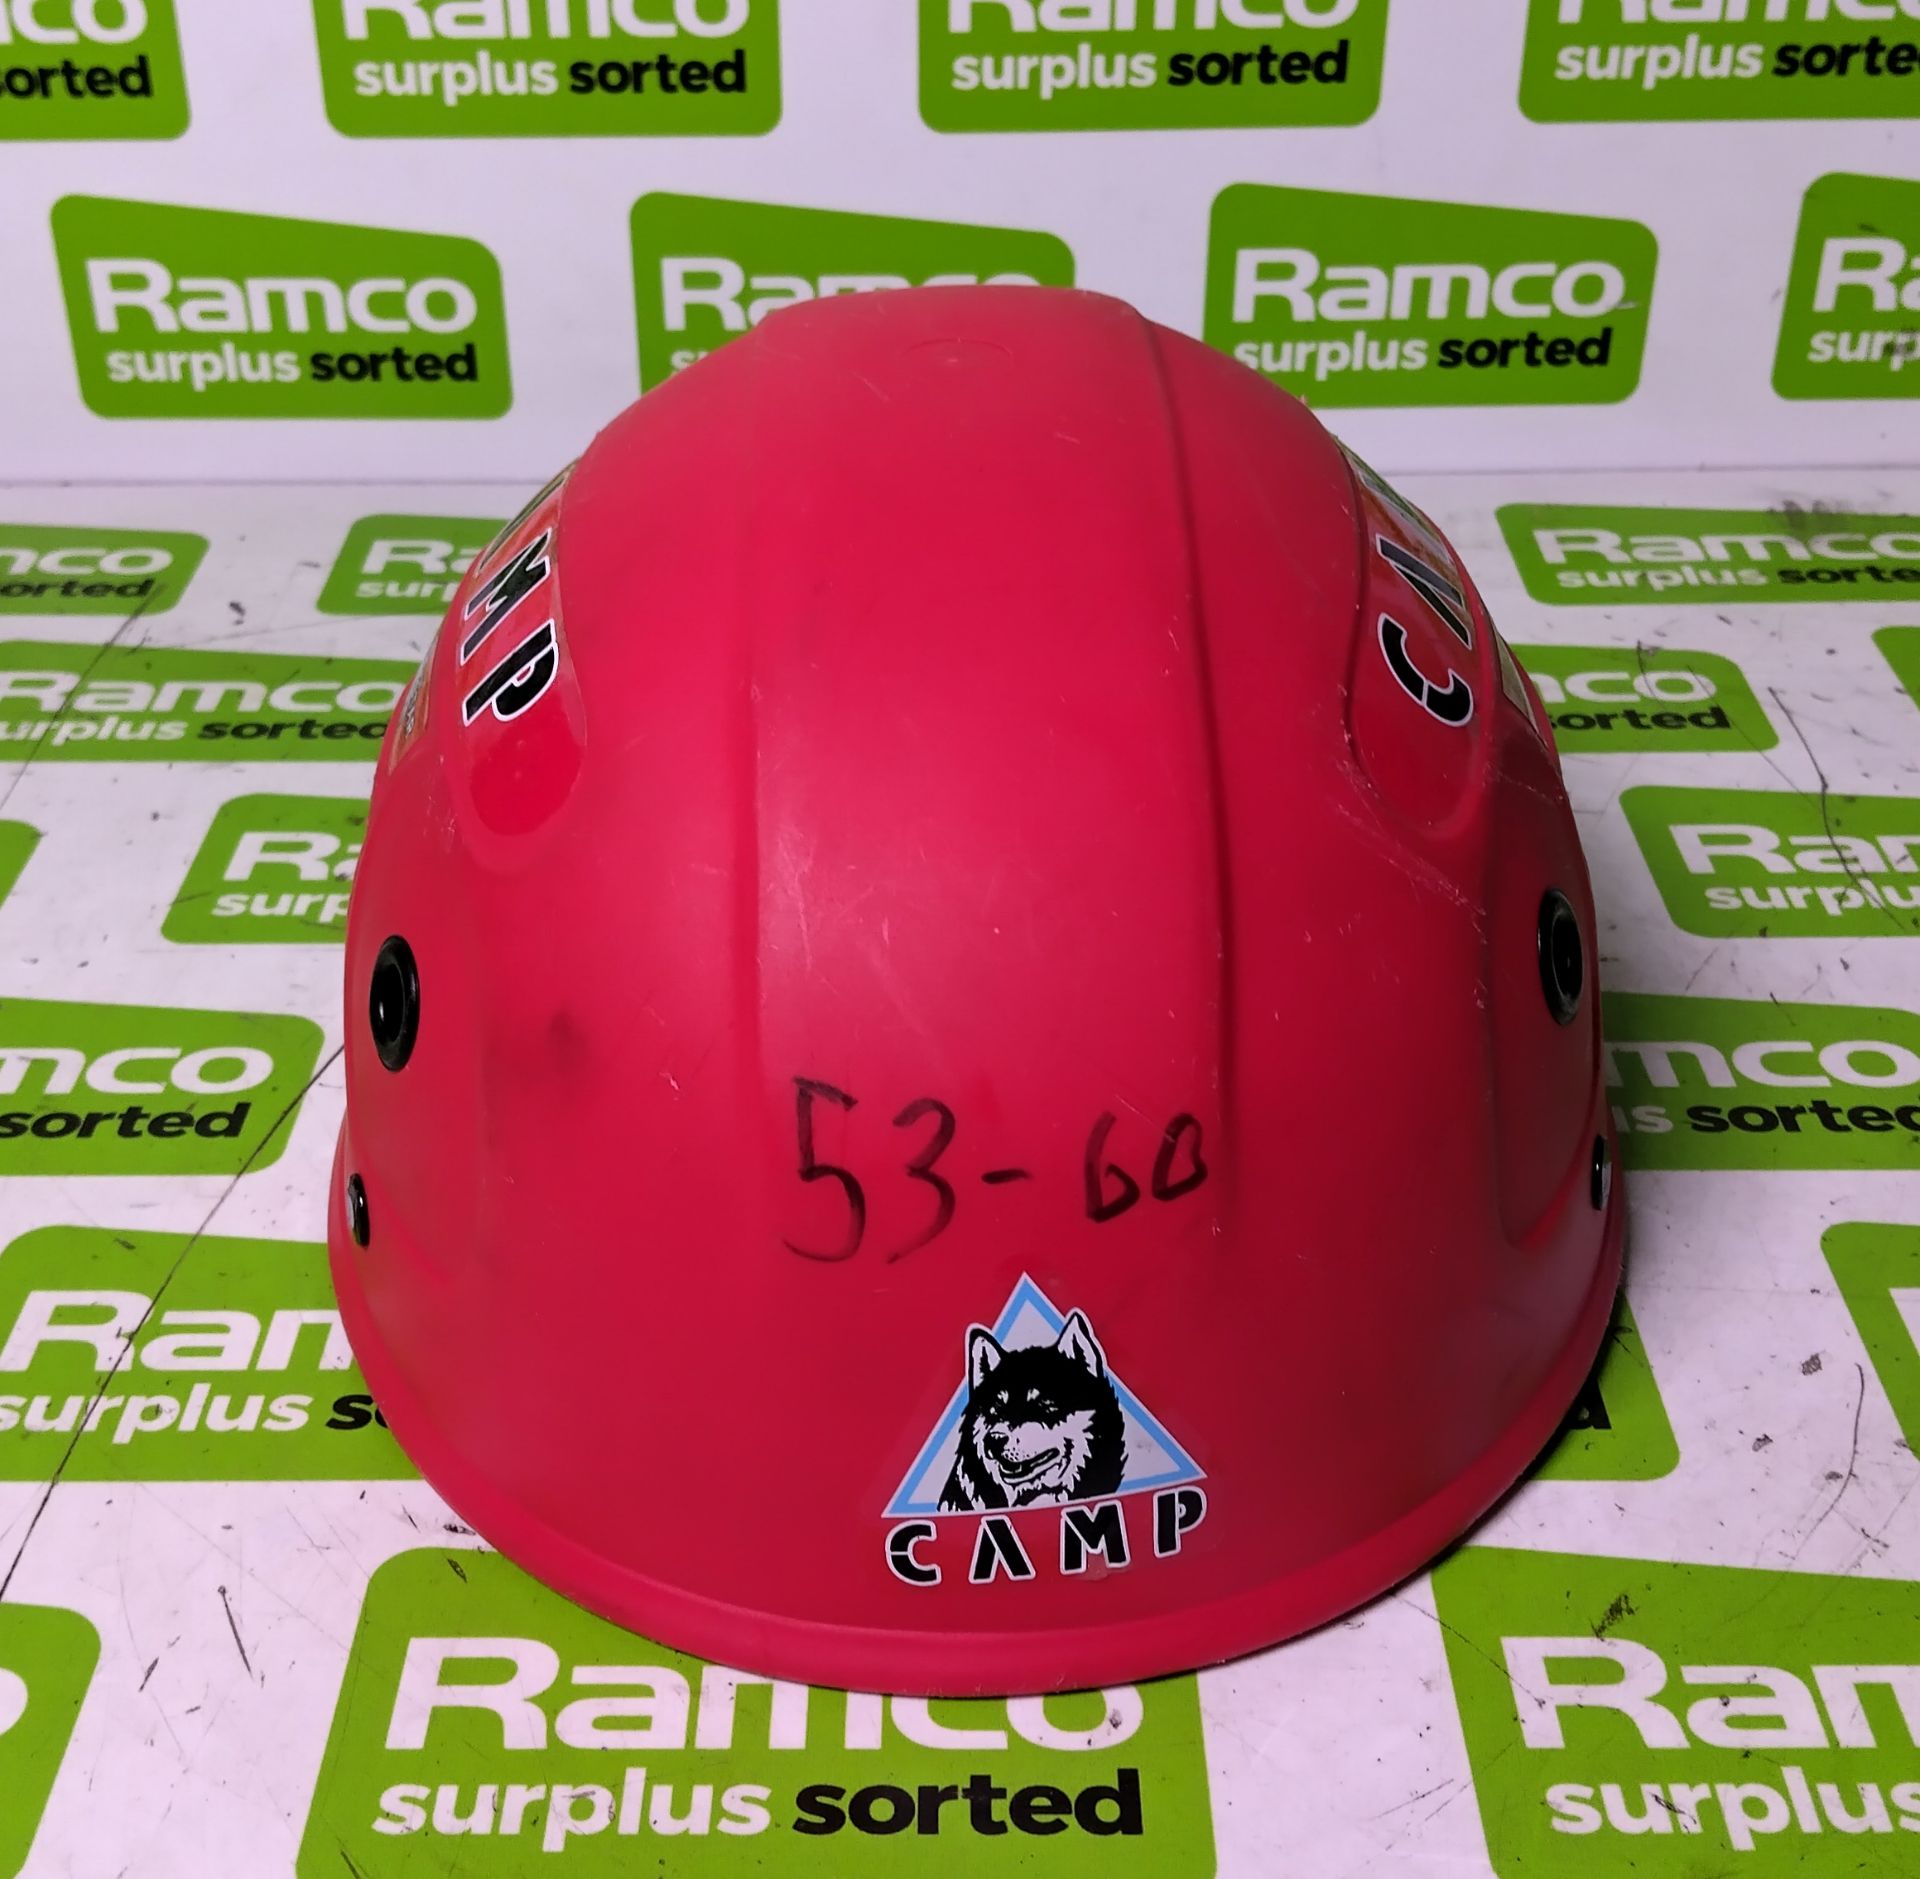 5x Rockstar Camp helmets - red - size: 53-60cm - Image 2 of 4